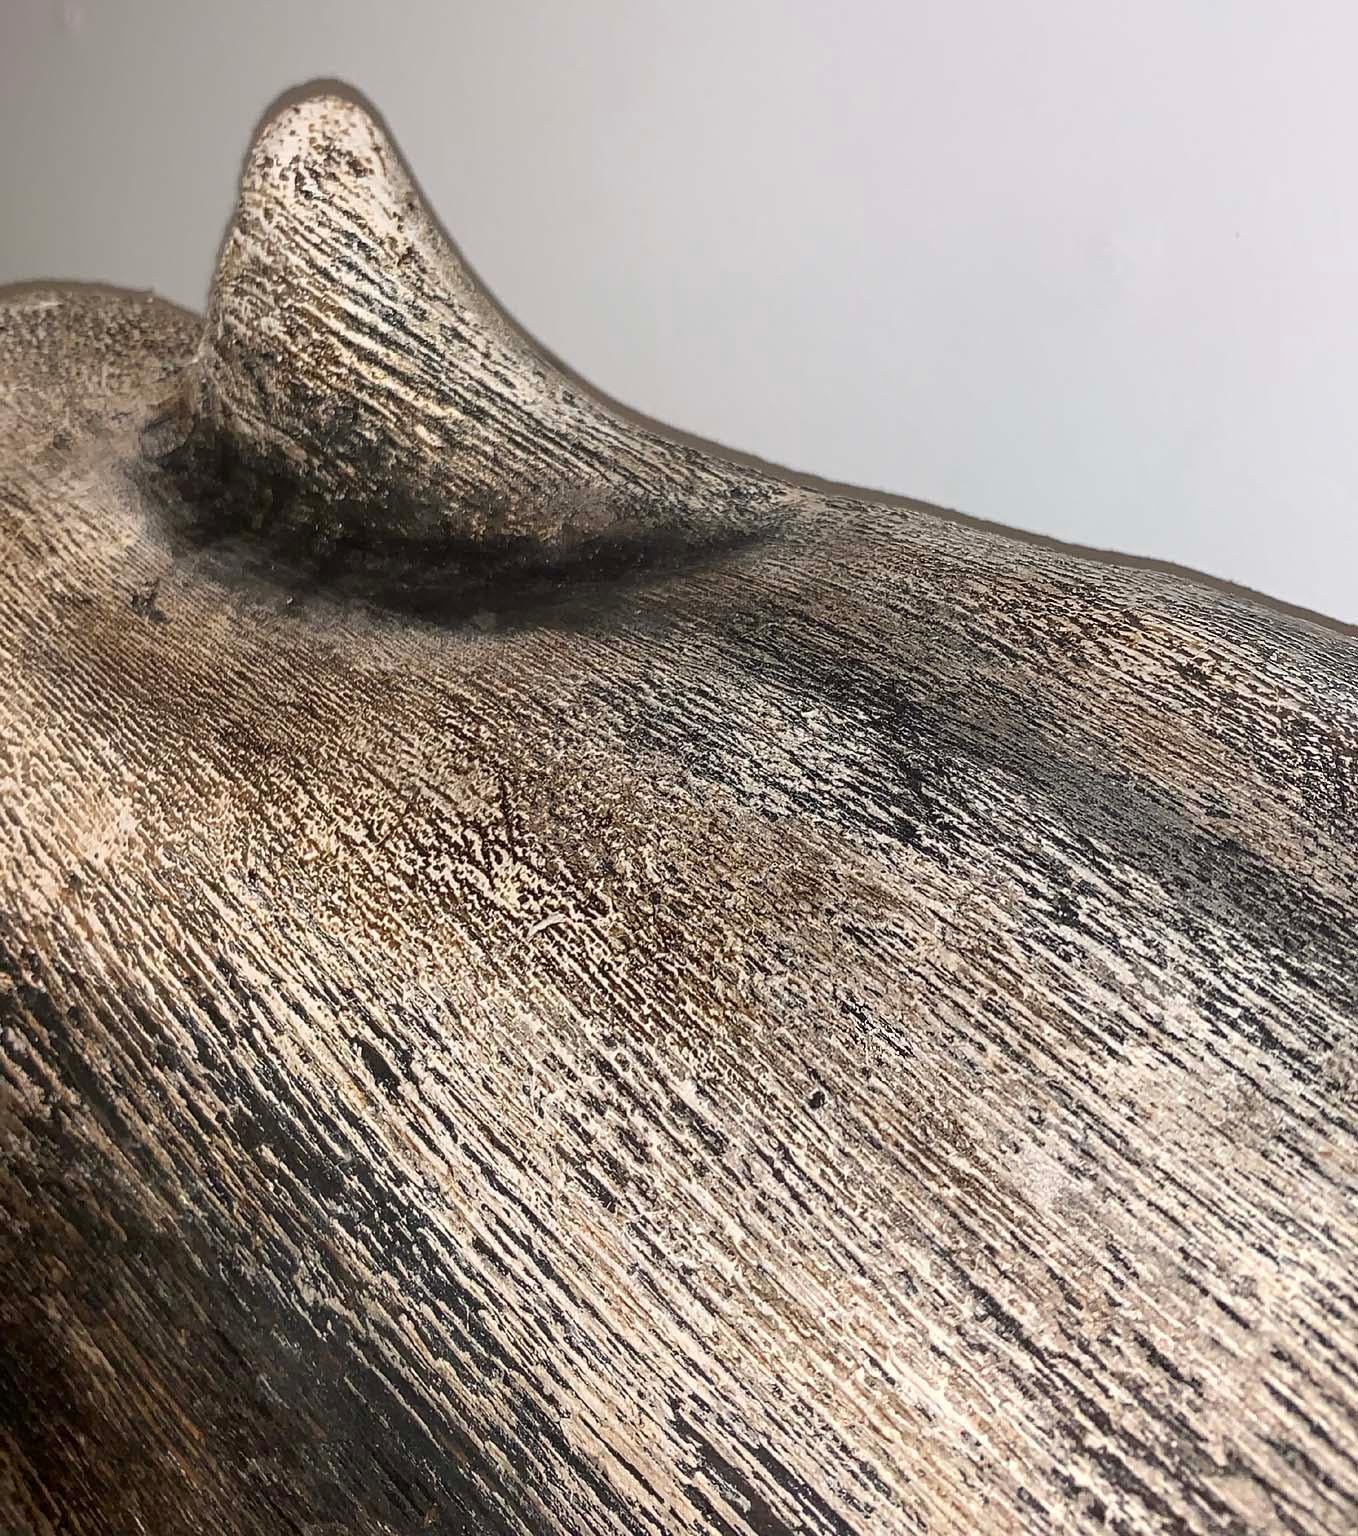 Folk Art Sculpture Whale Plaque Signed Randy Kolhoff